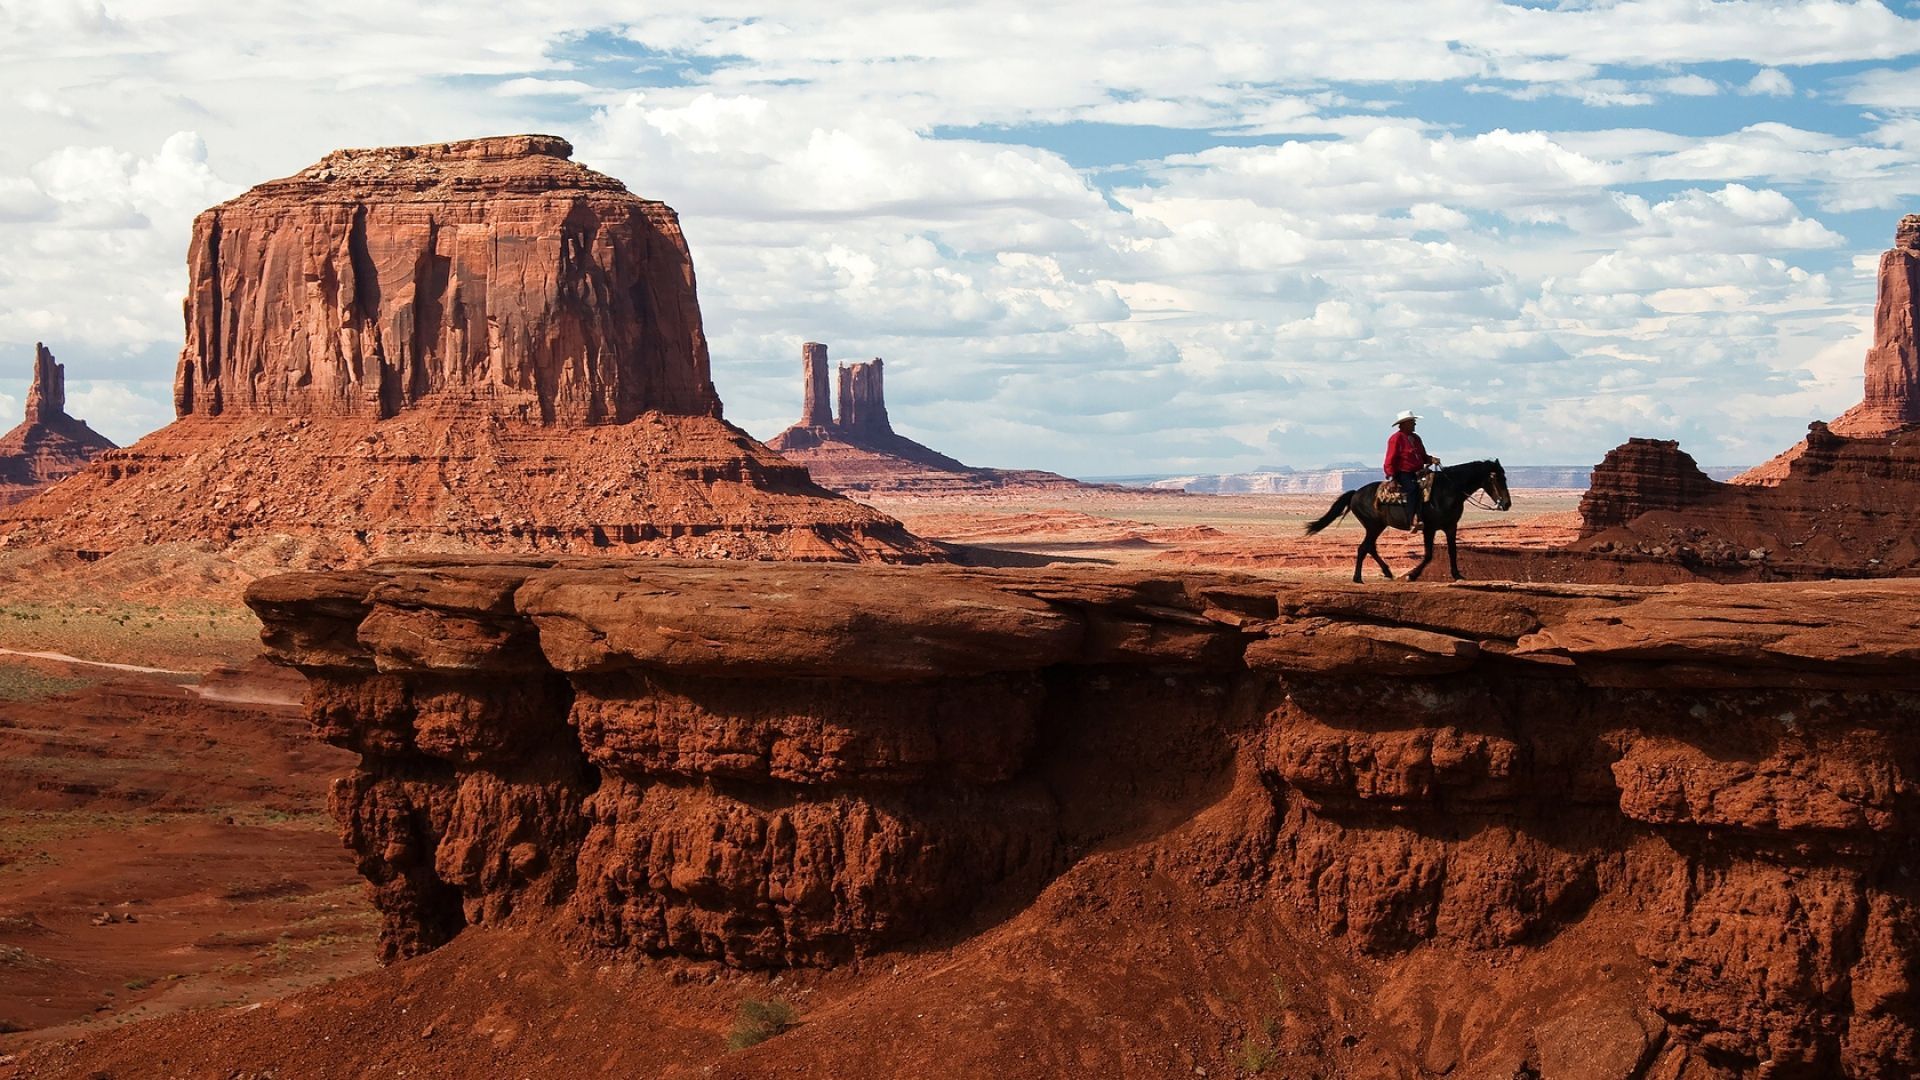 Download Wallpaper 1920x1080 Canyon, Desert, Horseback rider, Wild